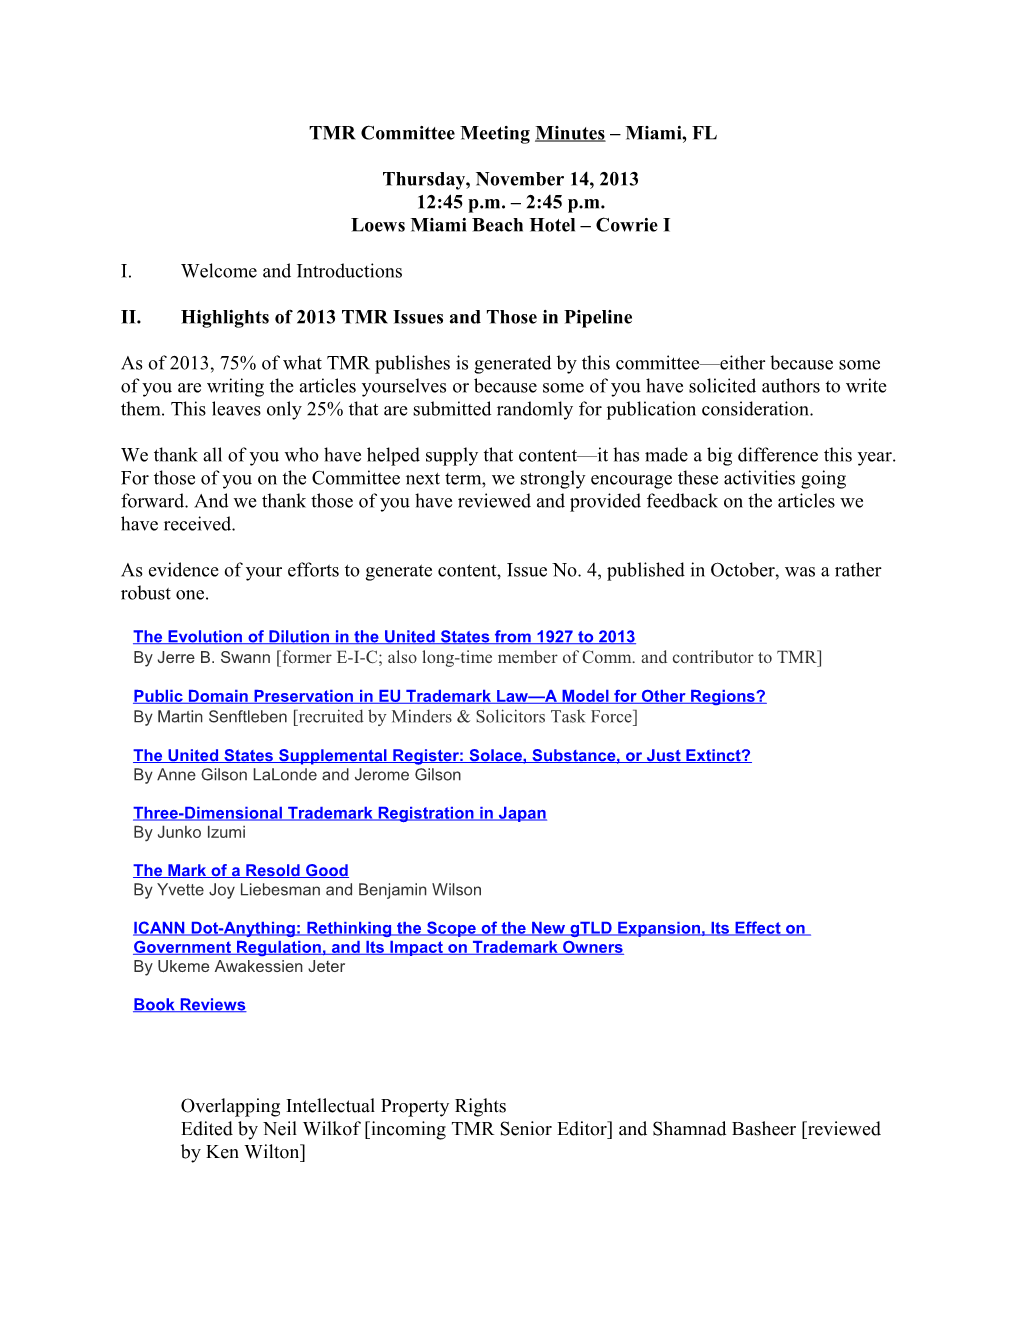 TMR Committee Meeting Minutes - Miami, 2013